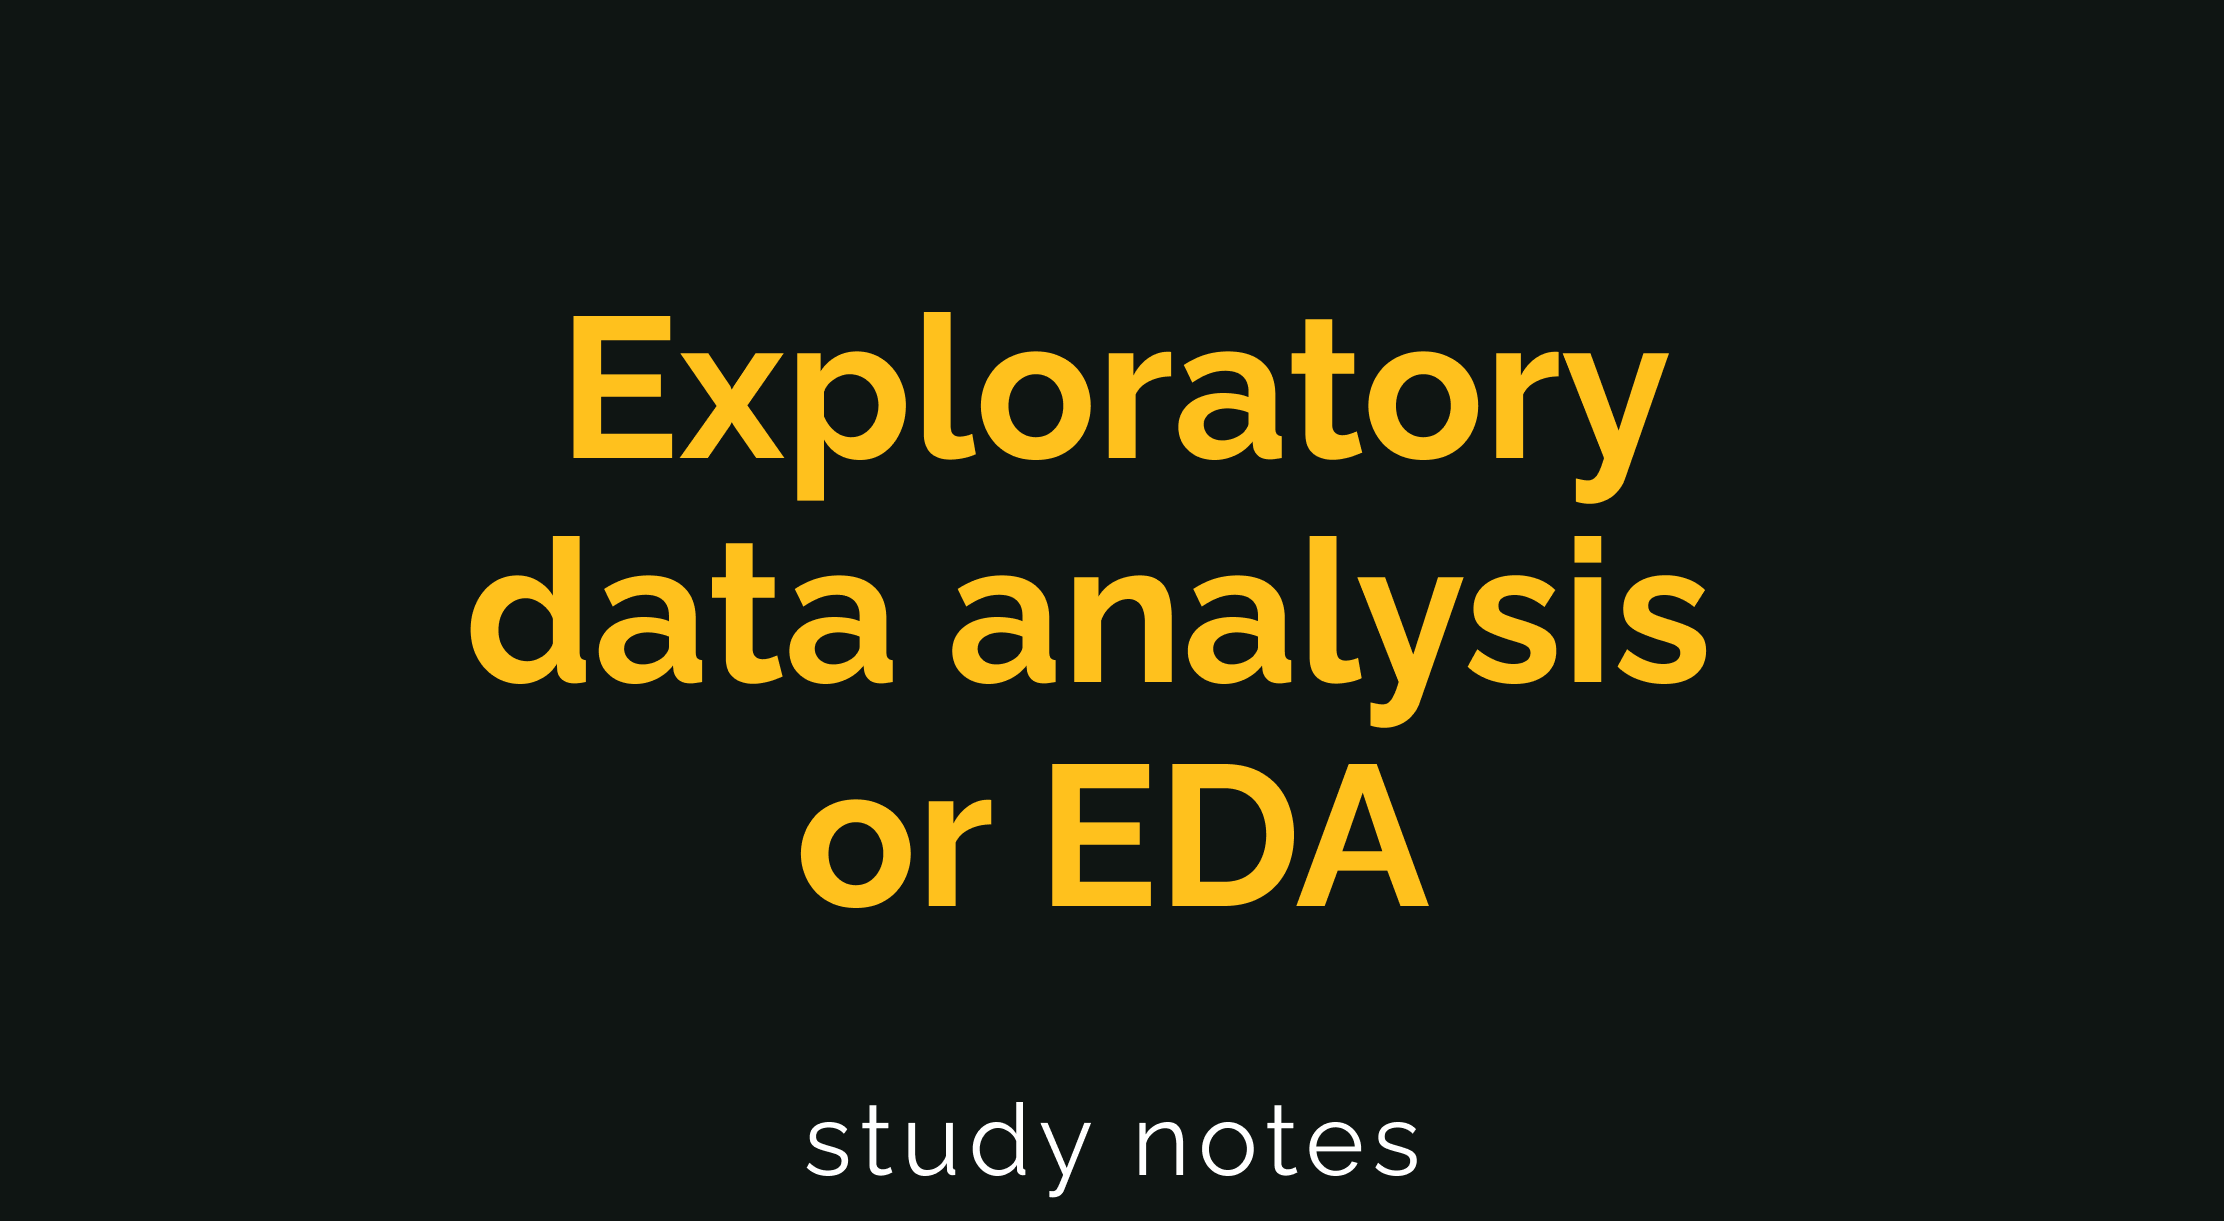 Exploratory data analysis or EDA